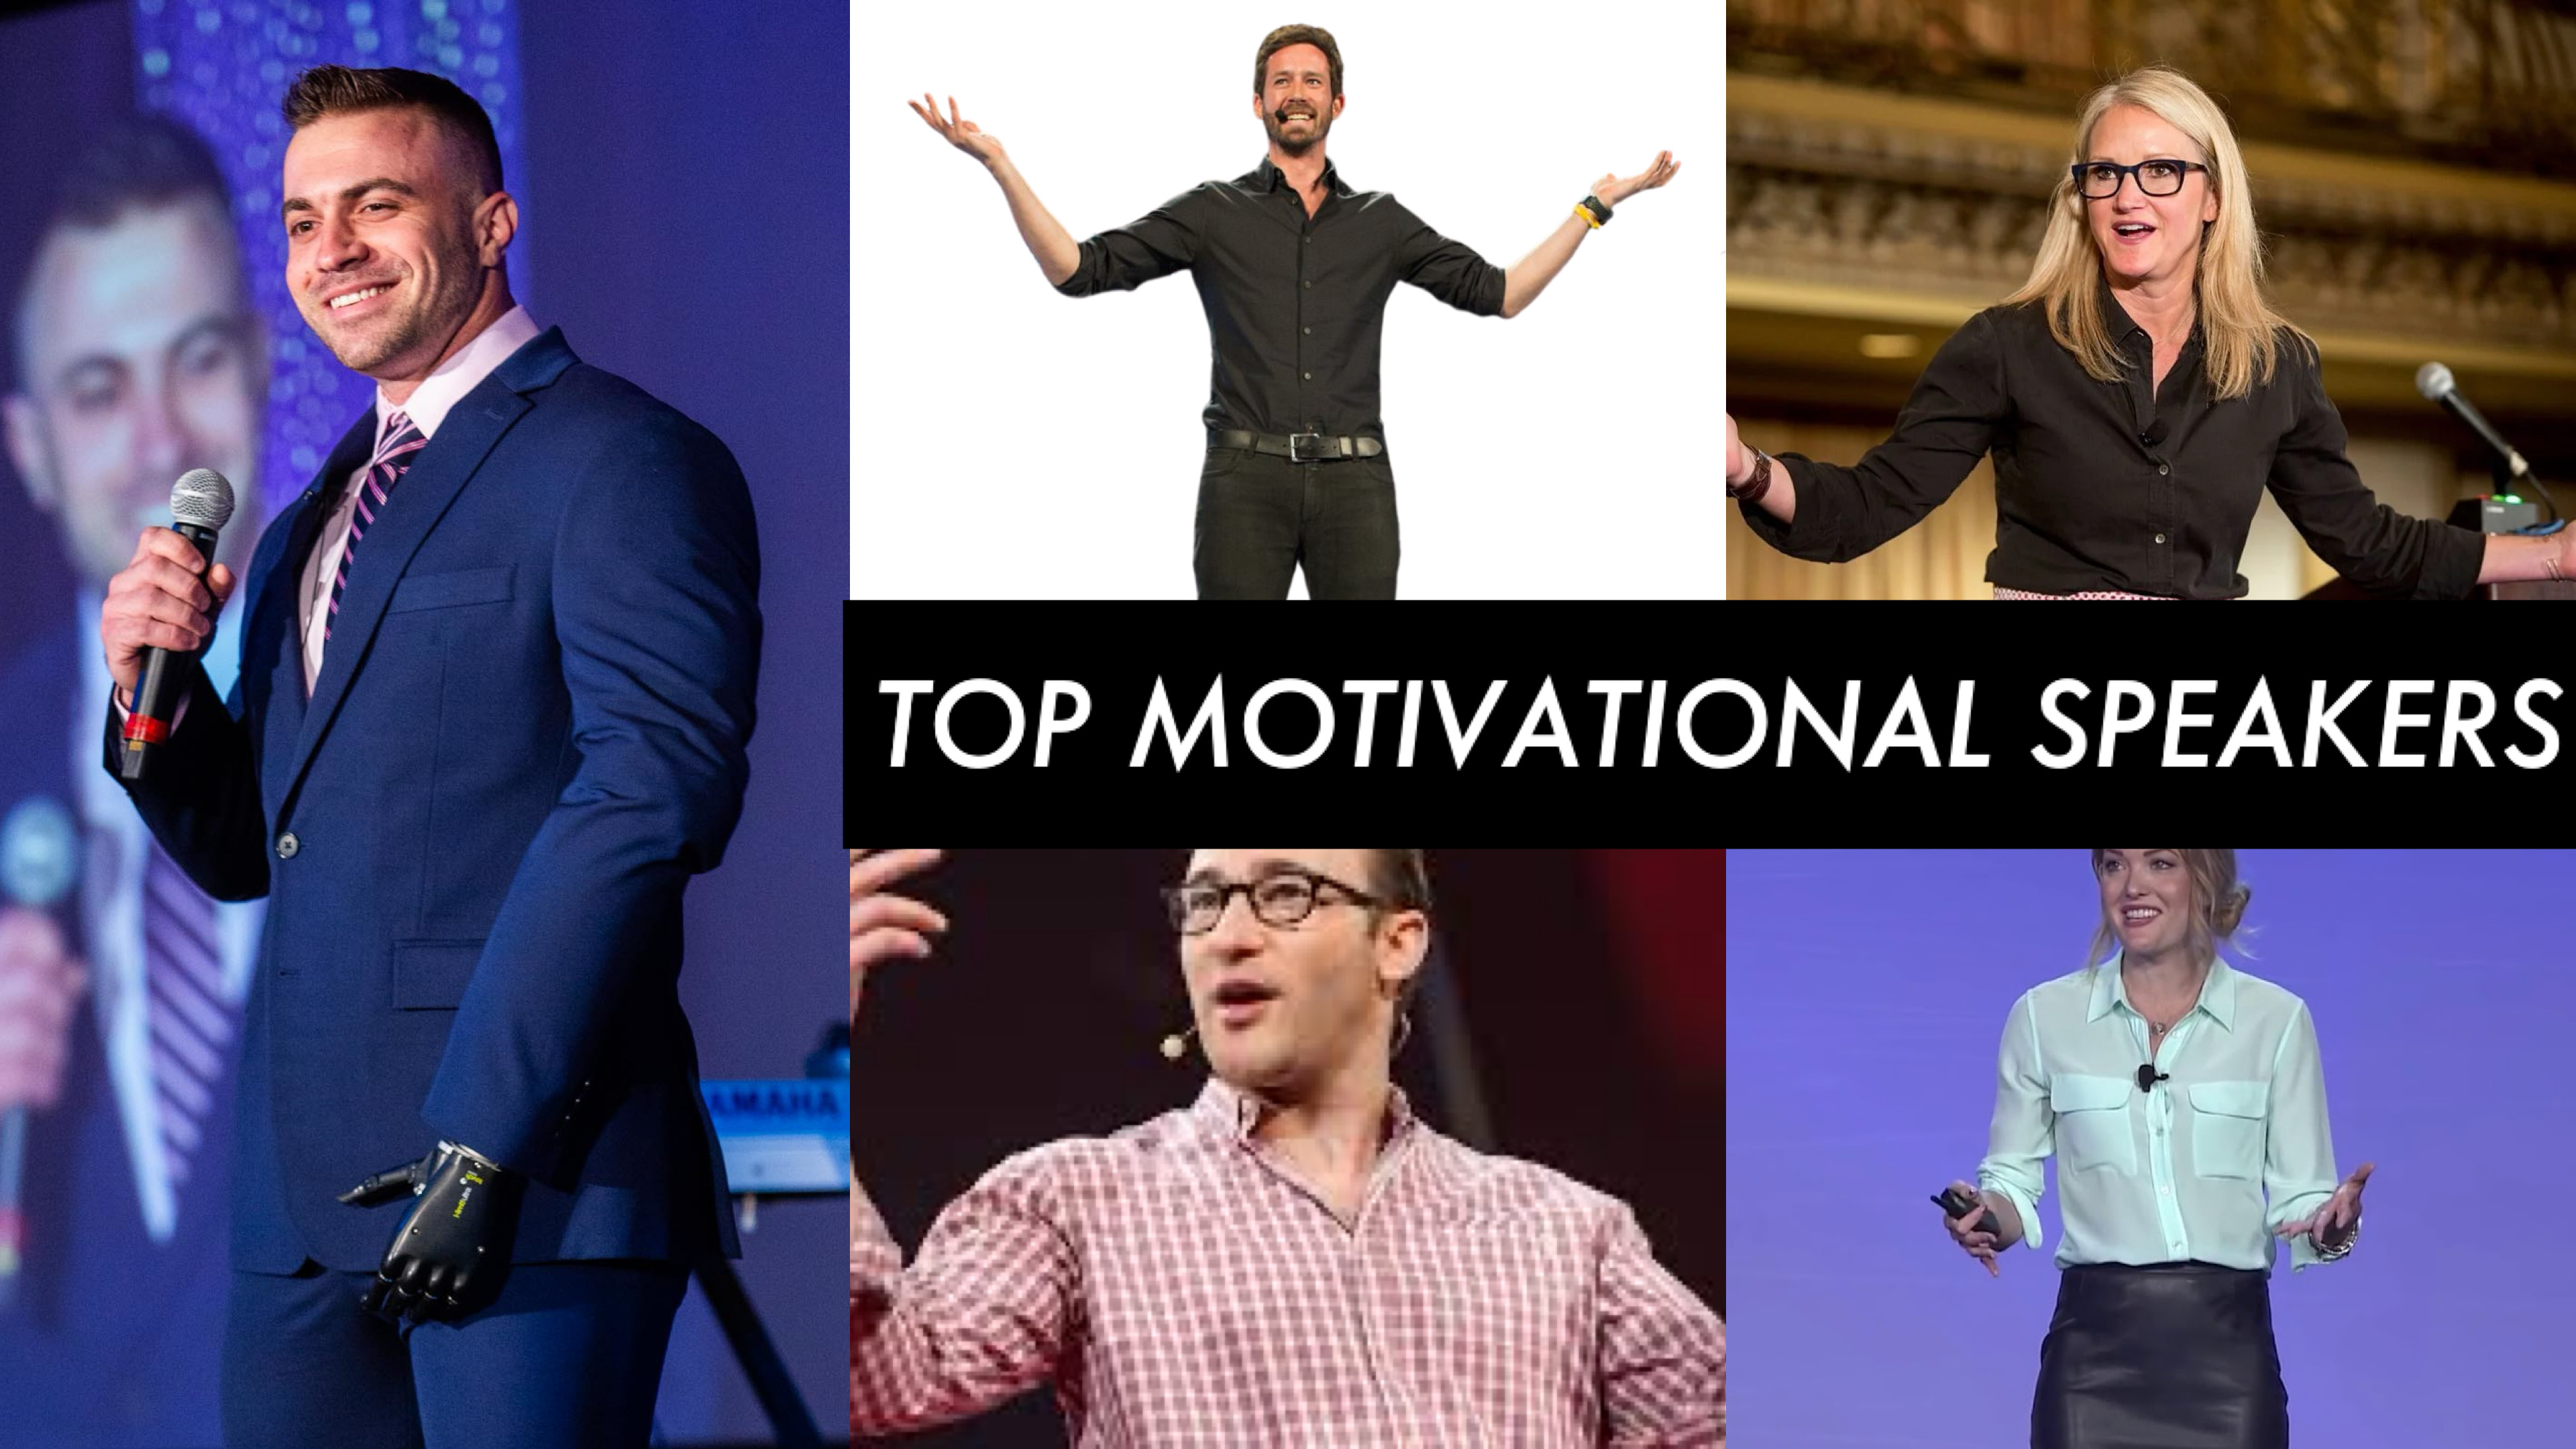 Top motivational speakers